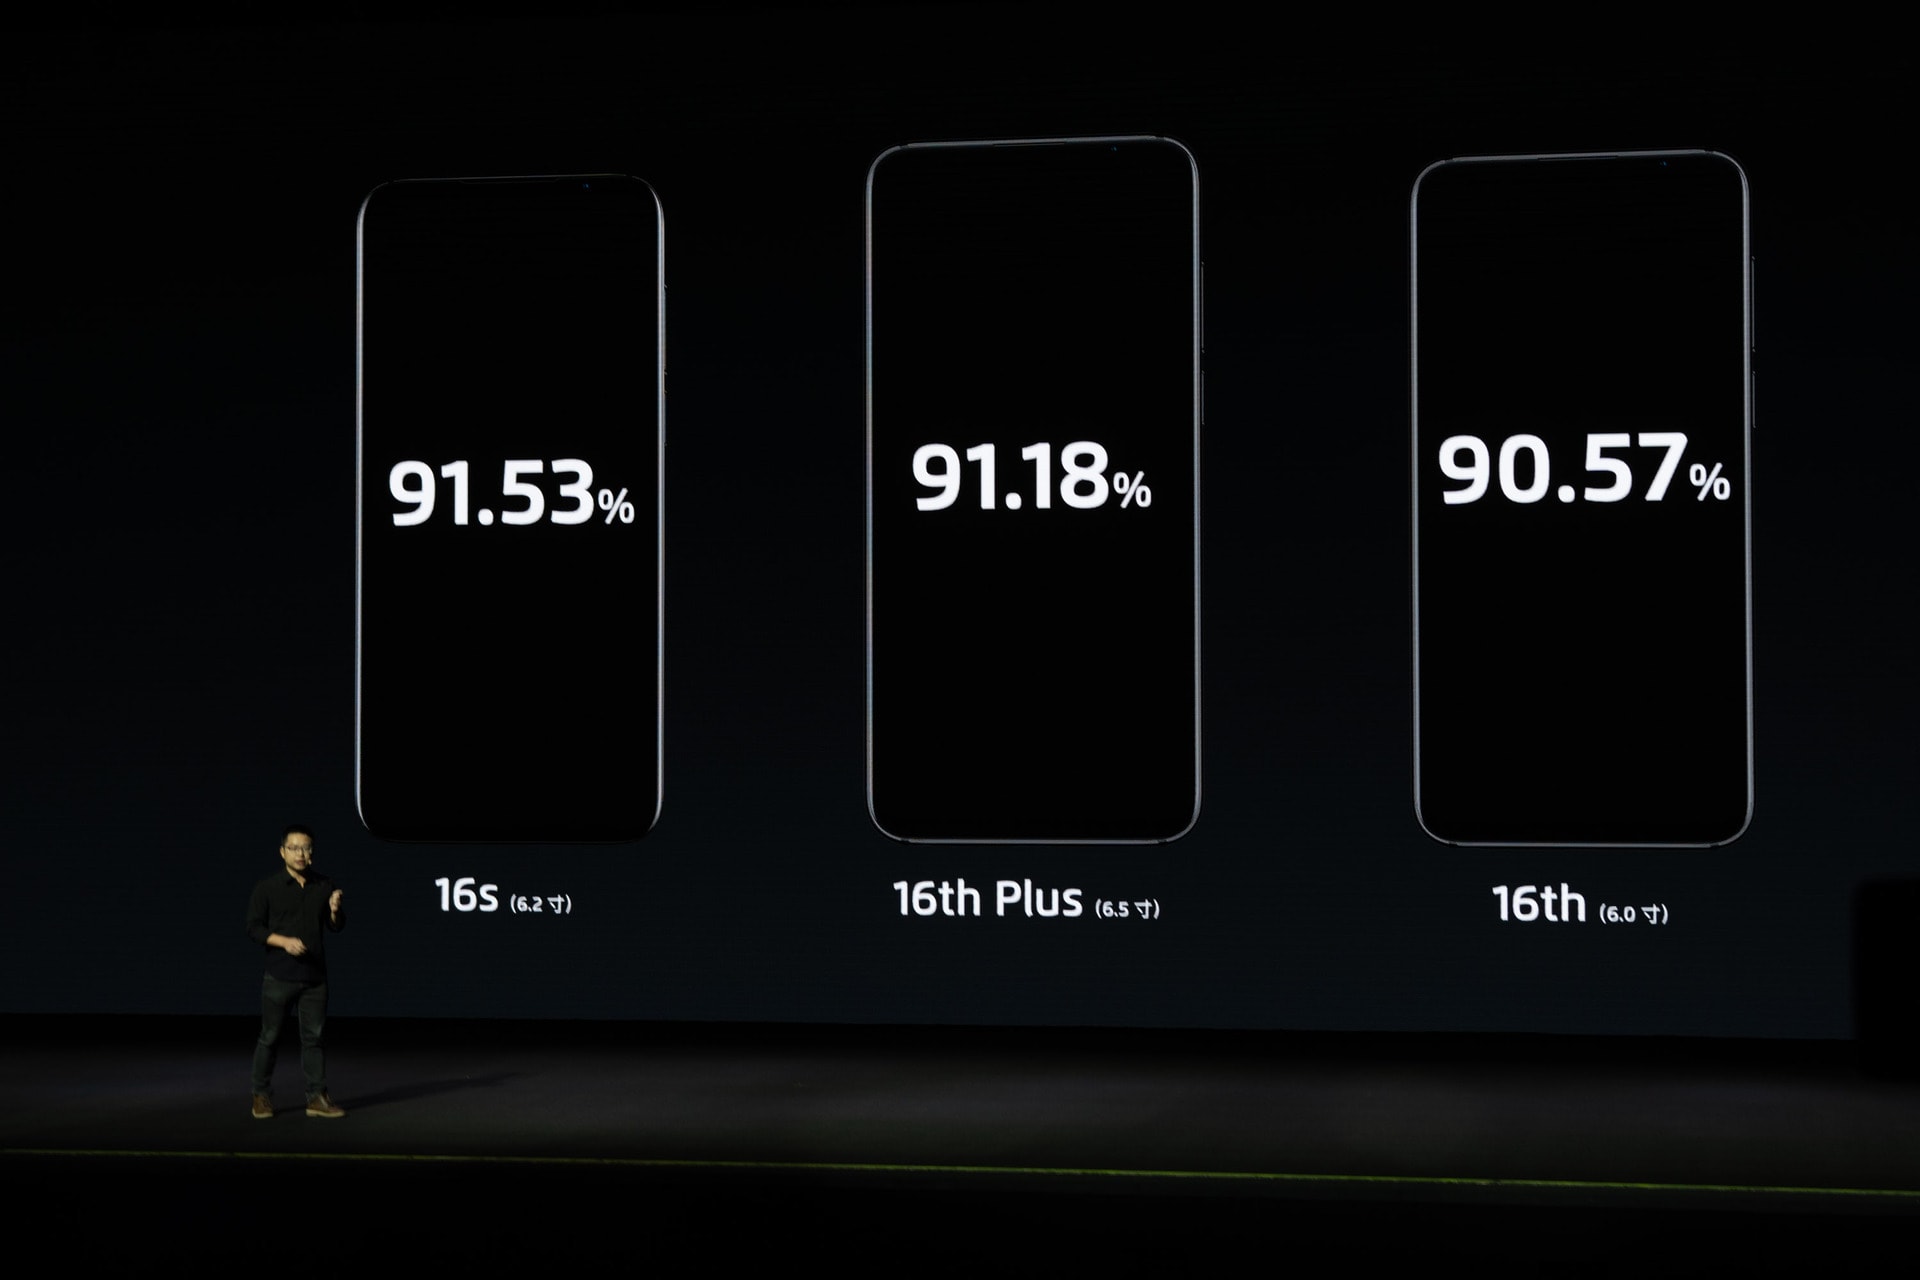 Meizu compares the screen-to-body ratios between the Meizu 16s, Meizu 16th Plus, and Meizu 16th